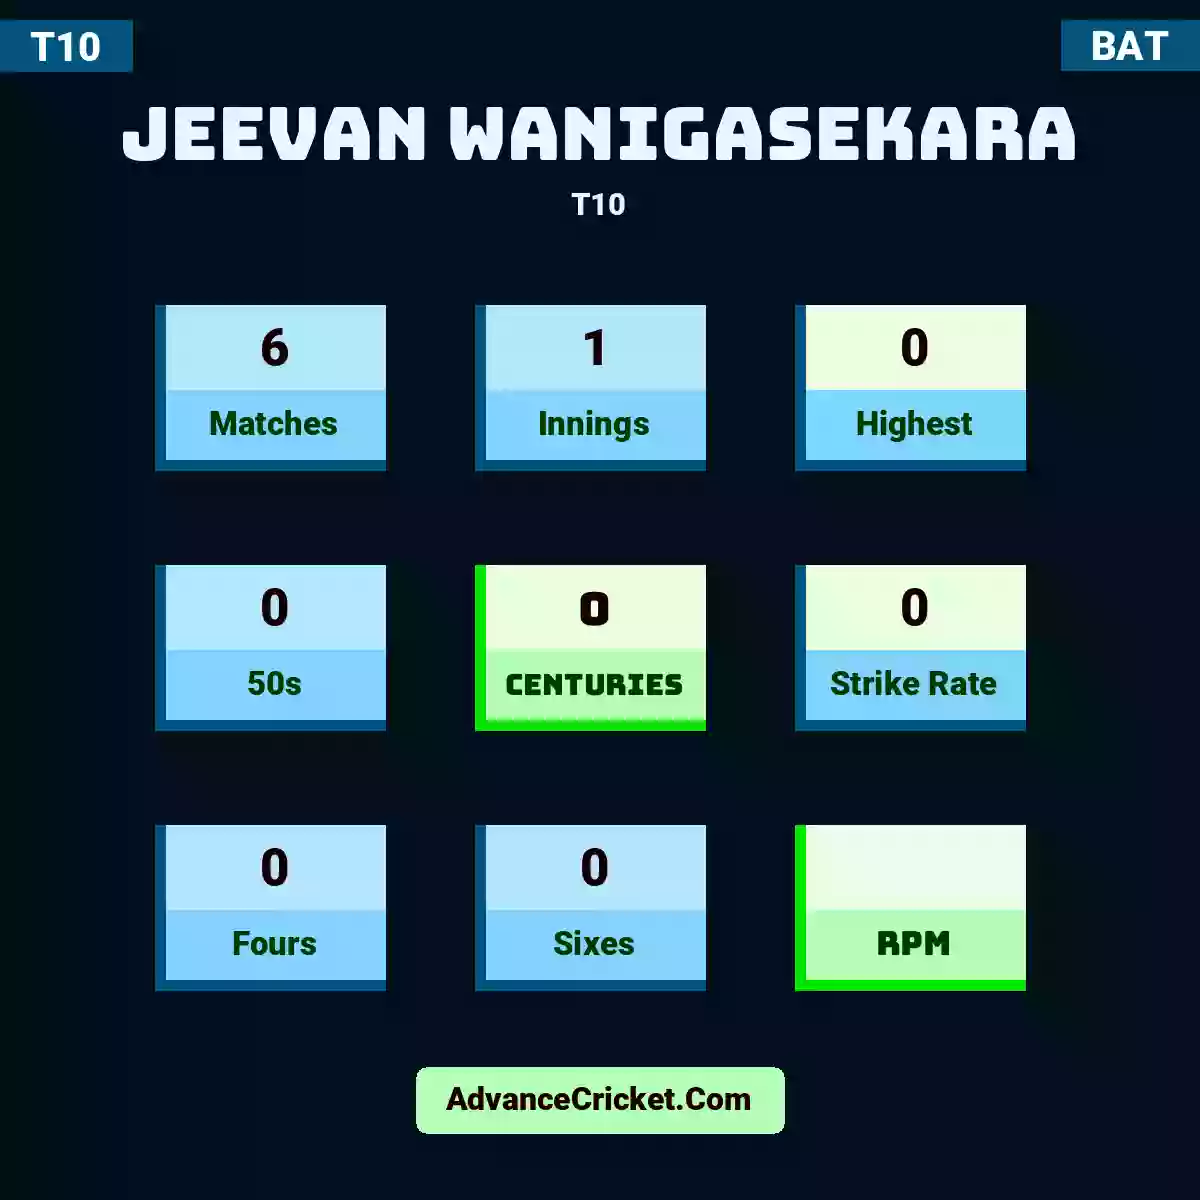 Jeevan Wanigasekara T10 , Jeevan Wanigasekara played 6 matches, scored 0 runs as highest, 0 half-centuries, and 0 centuries, with a strike rate of 0. J.Wanigasekara hit 0 fours and 0 sixes.